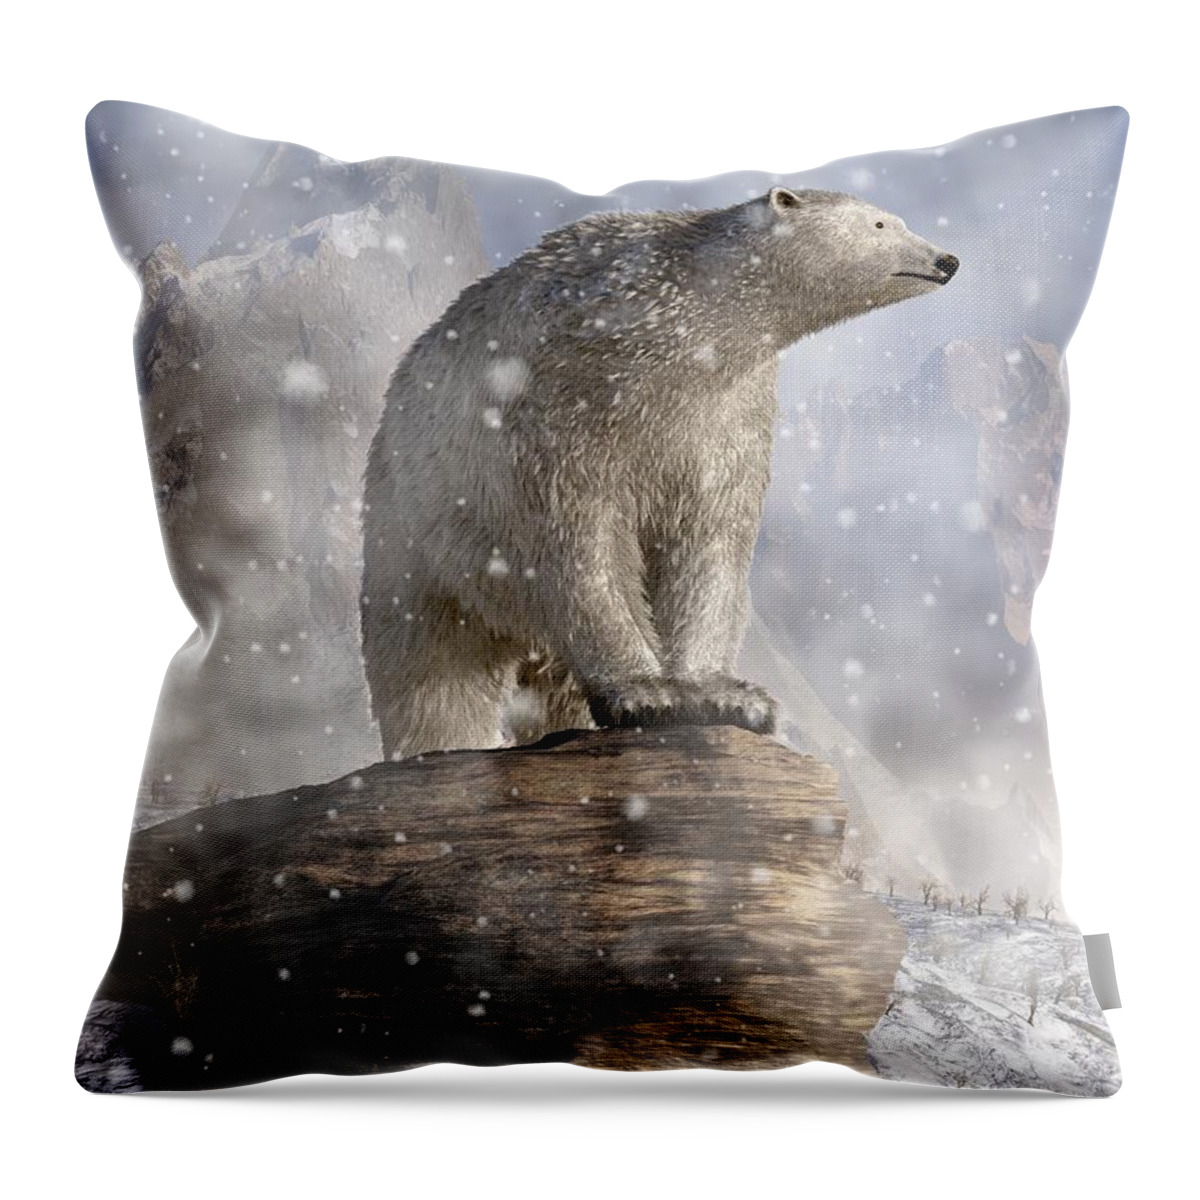 Polar Bear In A Snowstorm Throw Pillow featuring the digital art Polar Bear in a Snowstorm by Daniel Eskridge